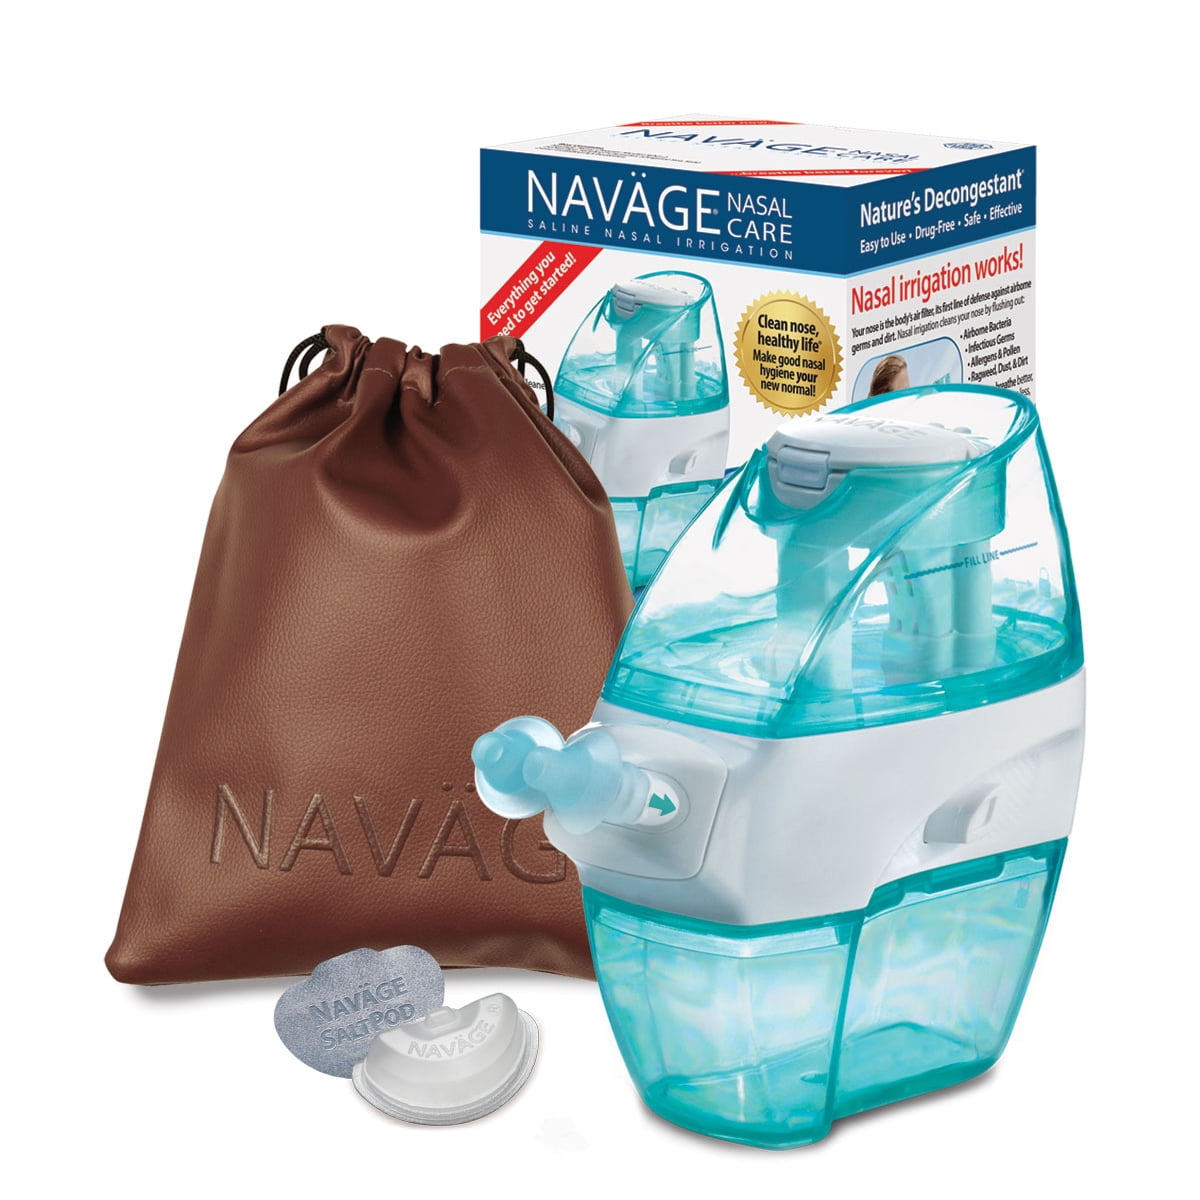 Navage Nasal Care TRAVEL Bundle: Navage Nose Cleaner, Burgundy Travel Bag,  and 20 SaltPods